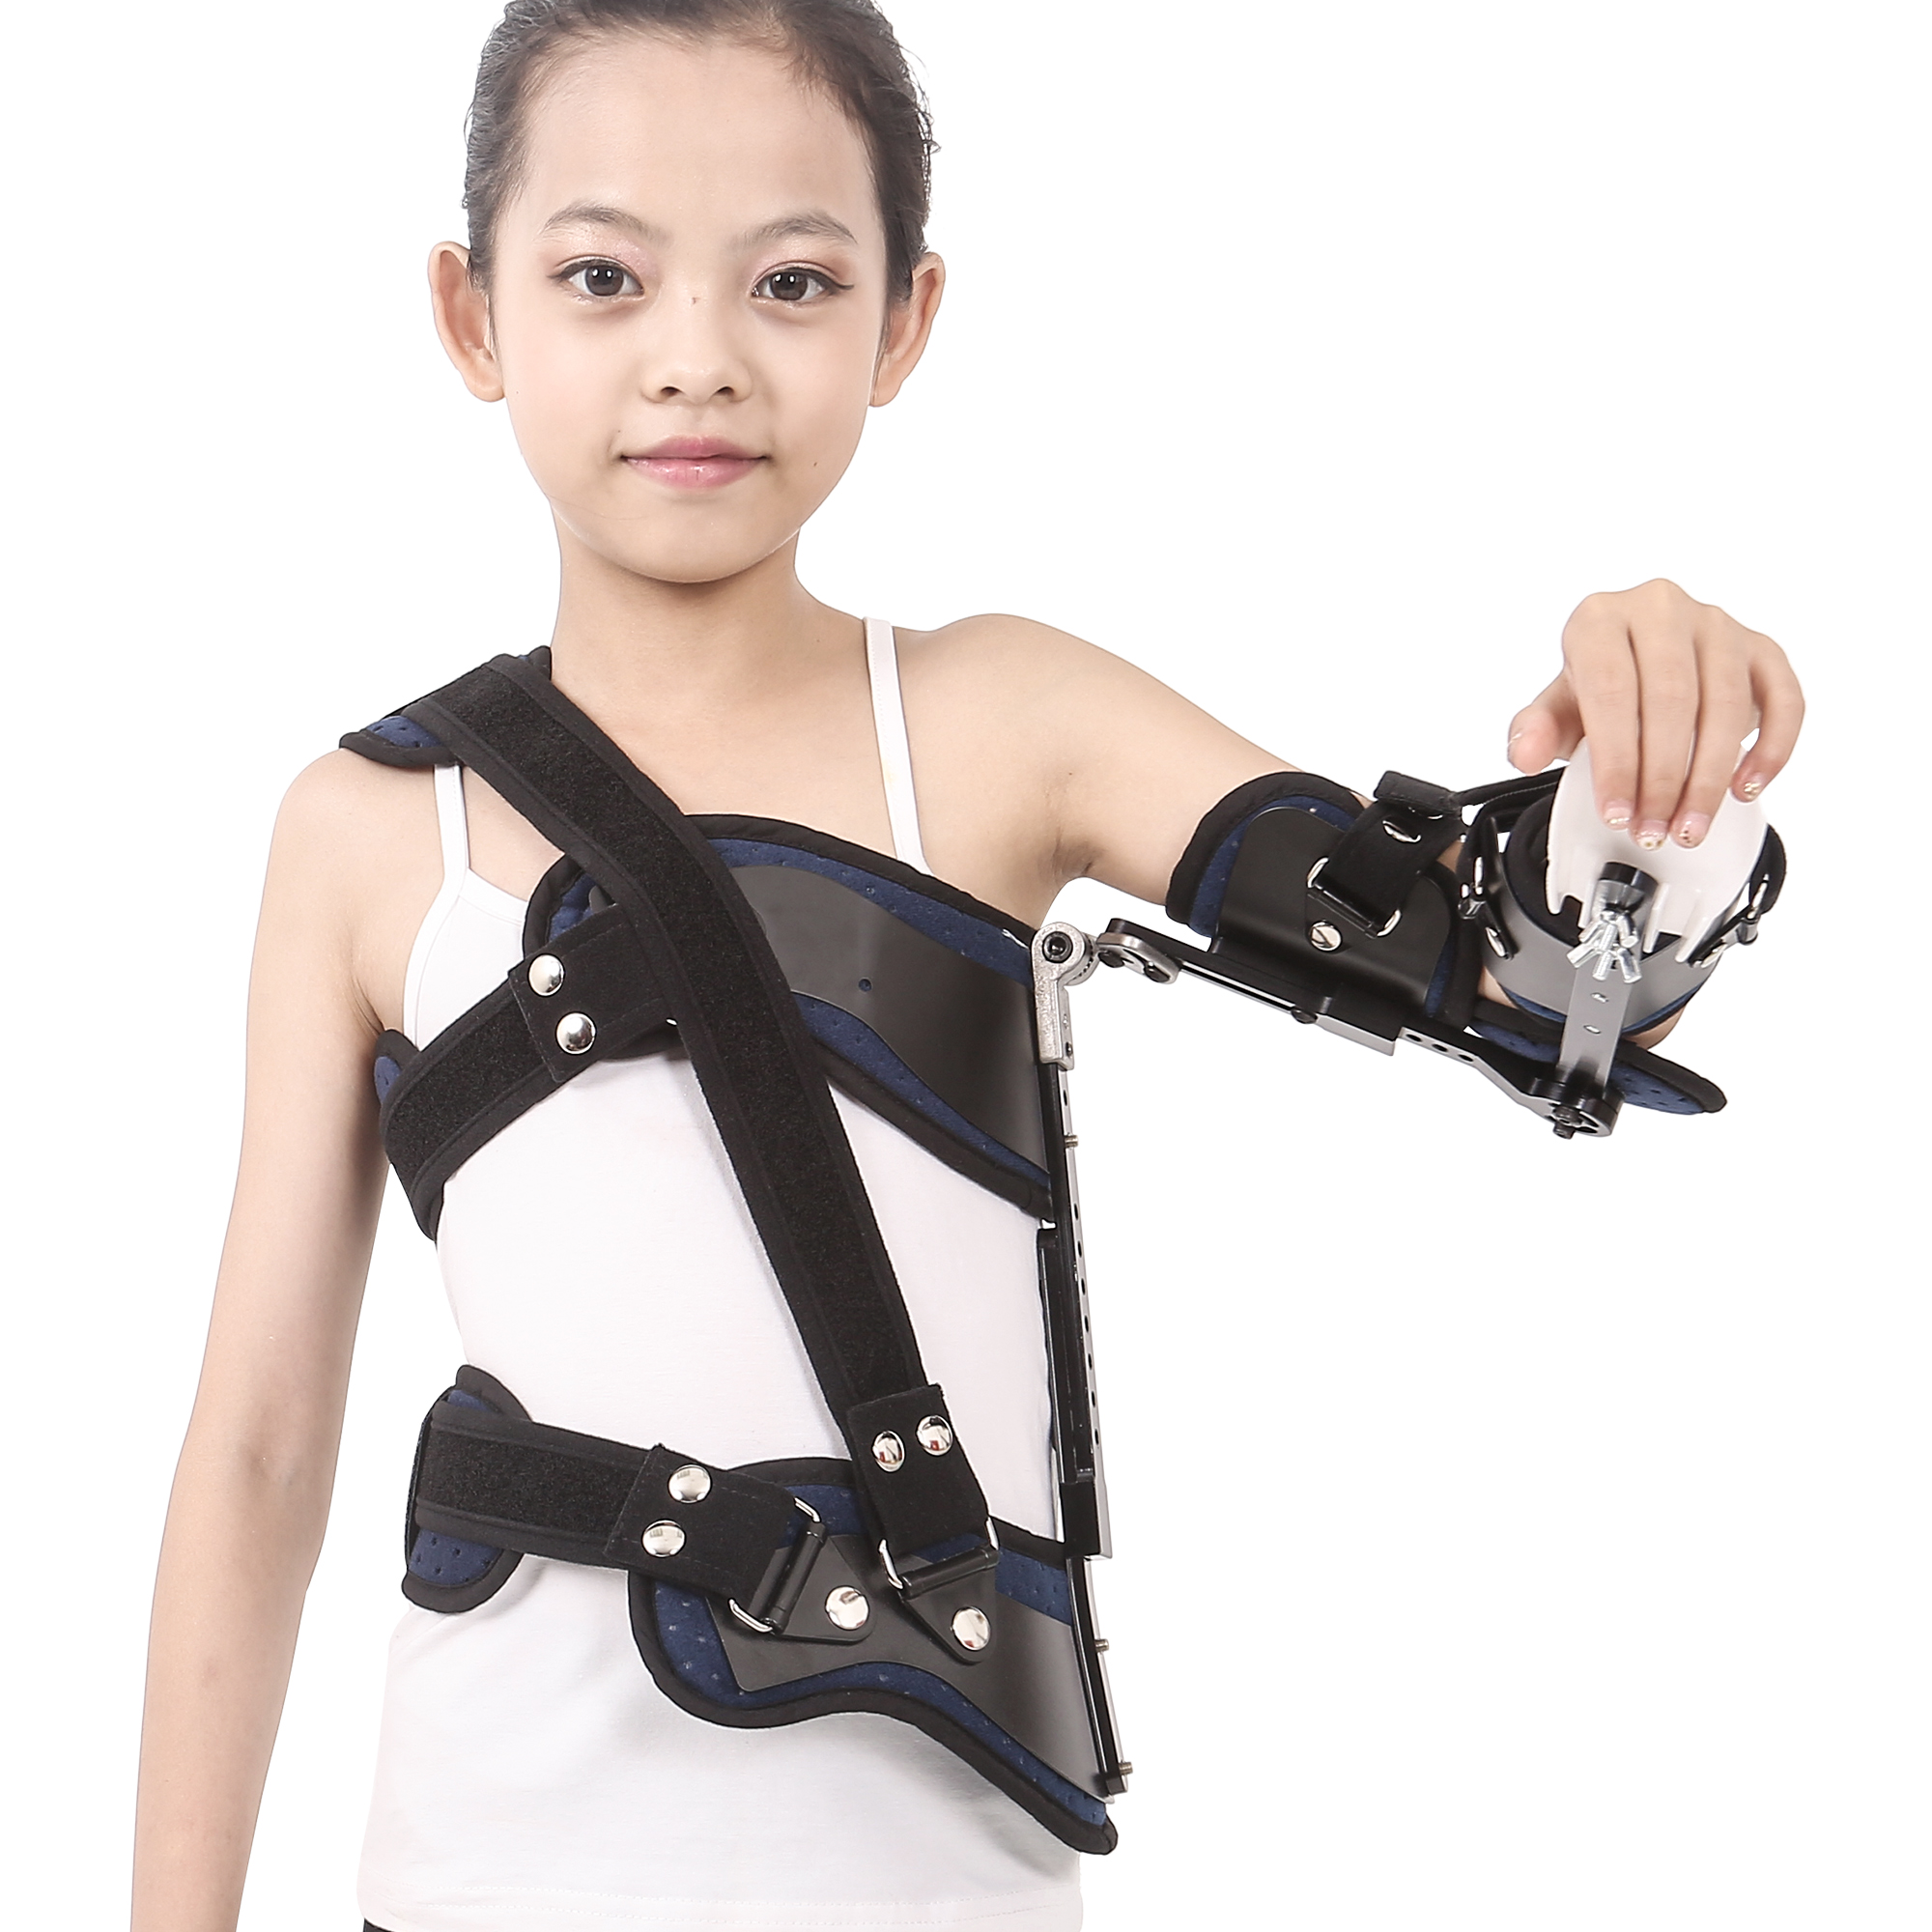 Medical Orthopedic Arm Brace Abduction Shoulder Support Immobilizer Arm Support Brace for Children